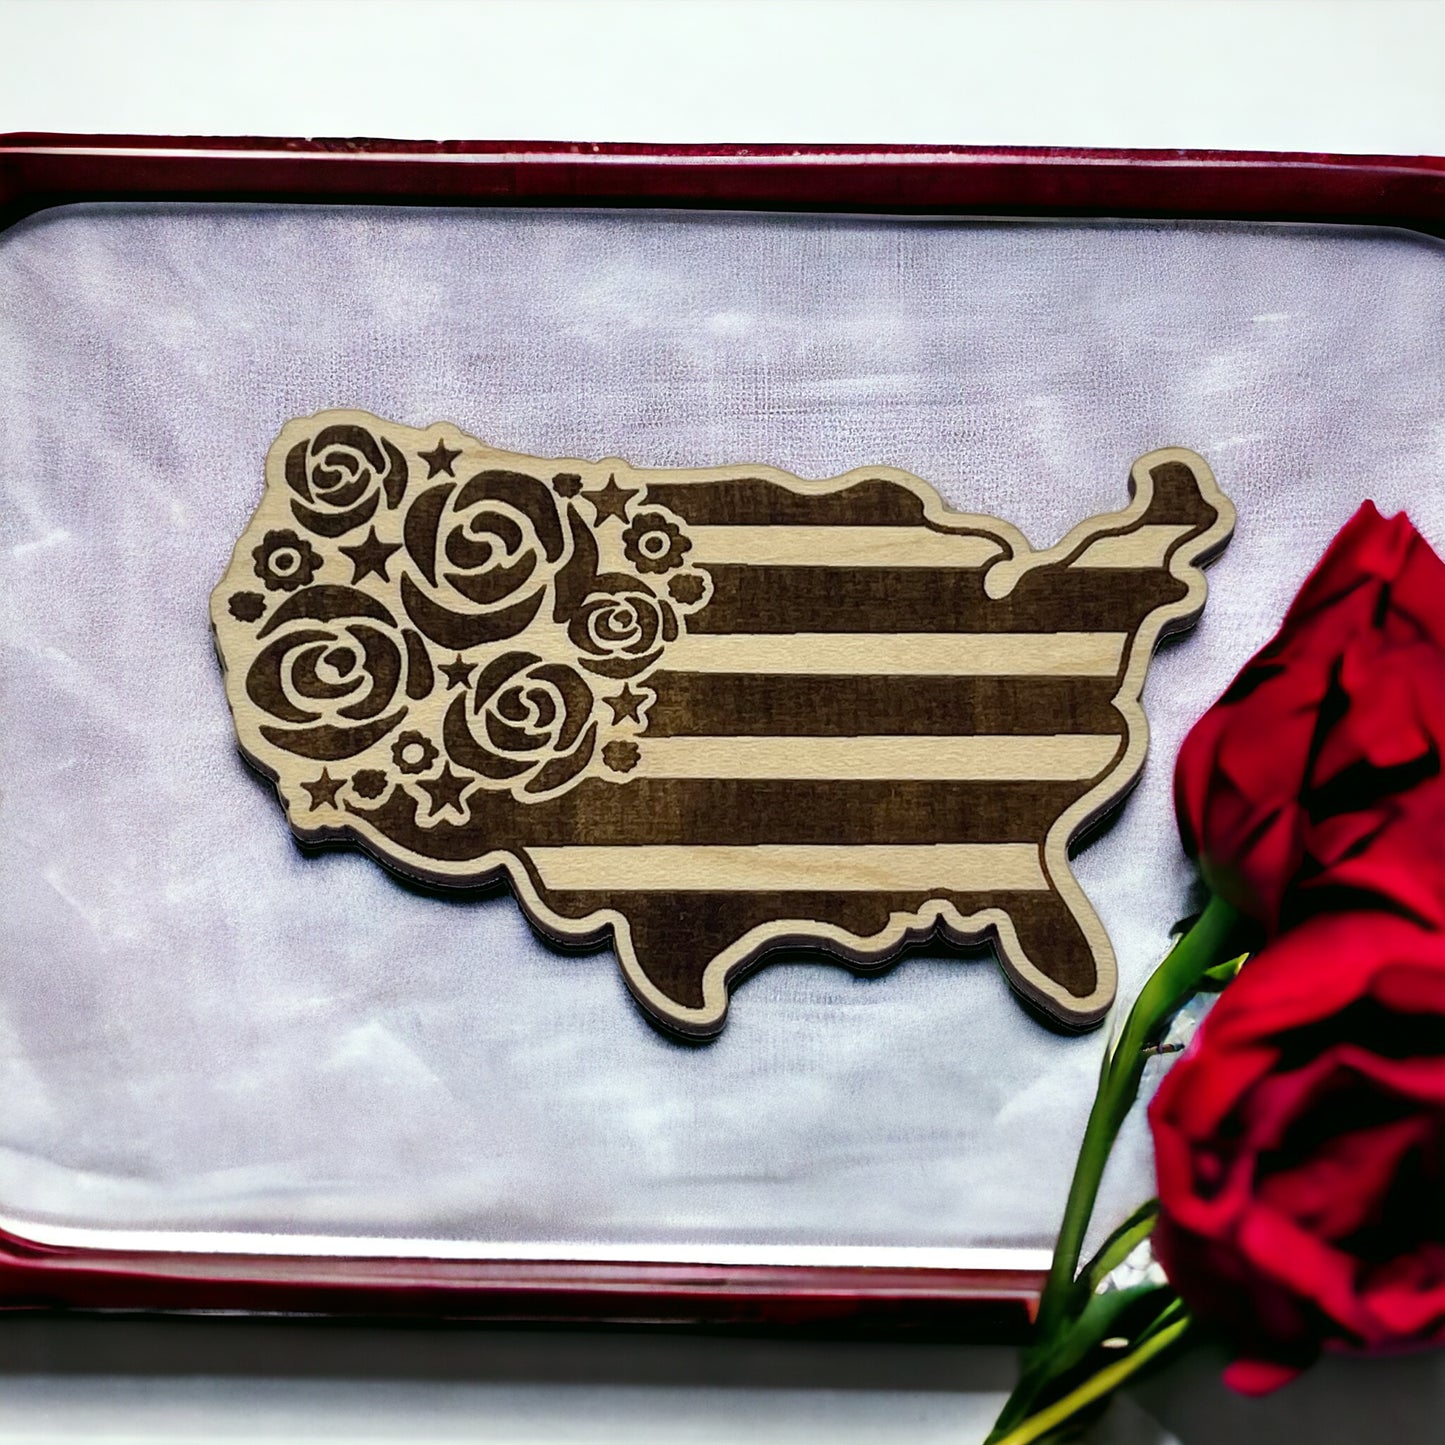 USA Shaped Magnet for Home Work School Office, Patriotic Decor Gift, Floral United States Flag Paintable Magnet, Boho Flower Wood Decoration